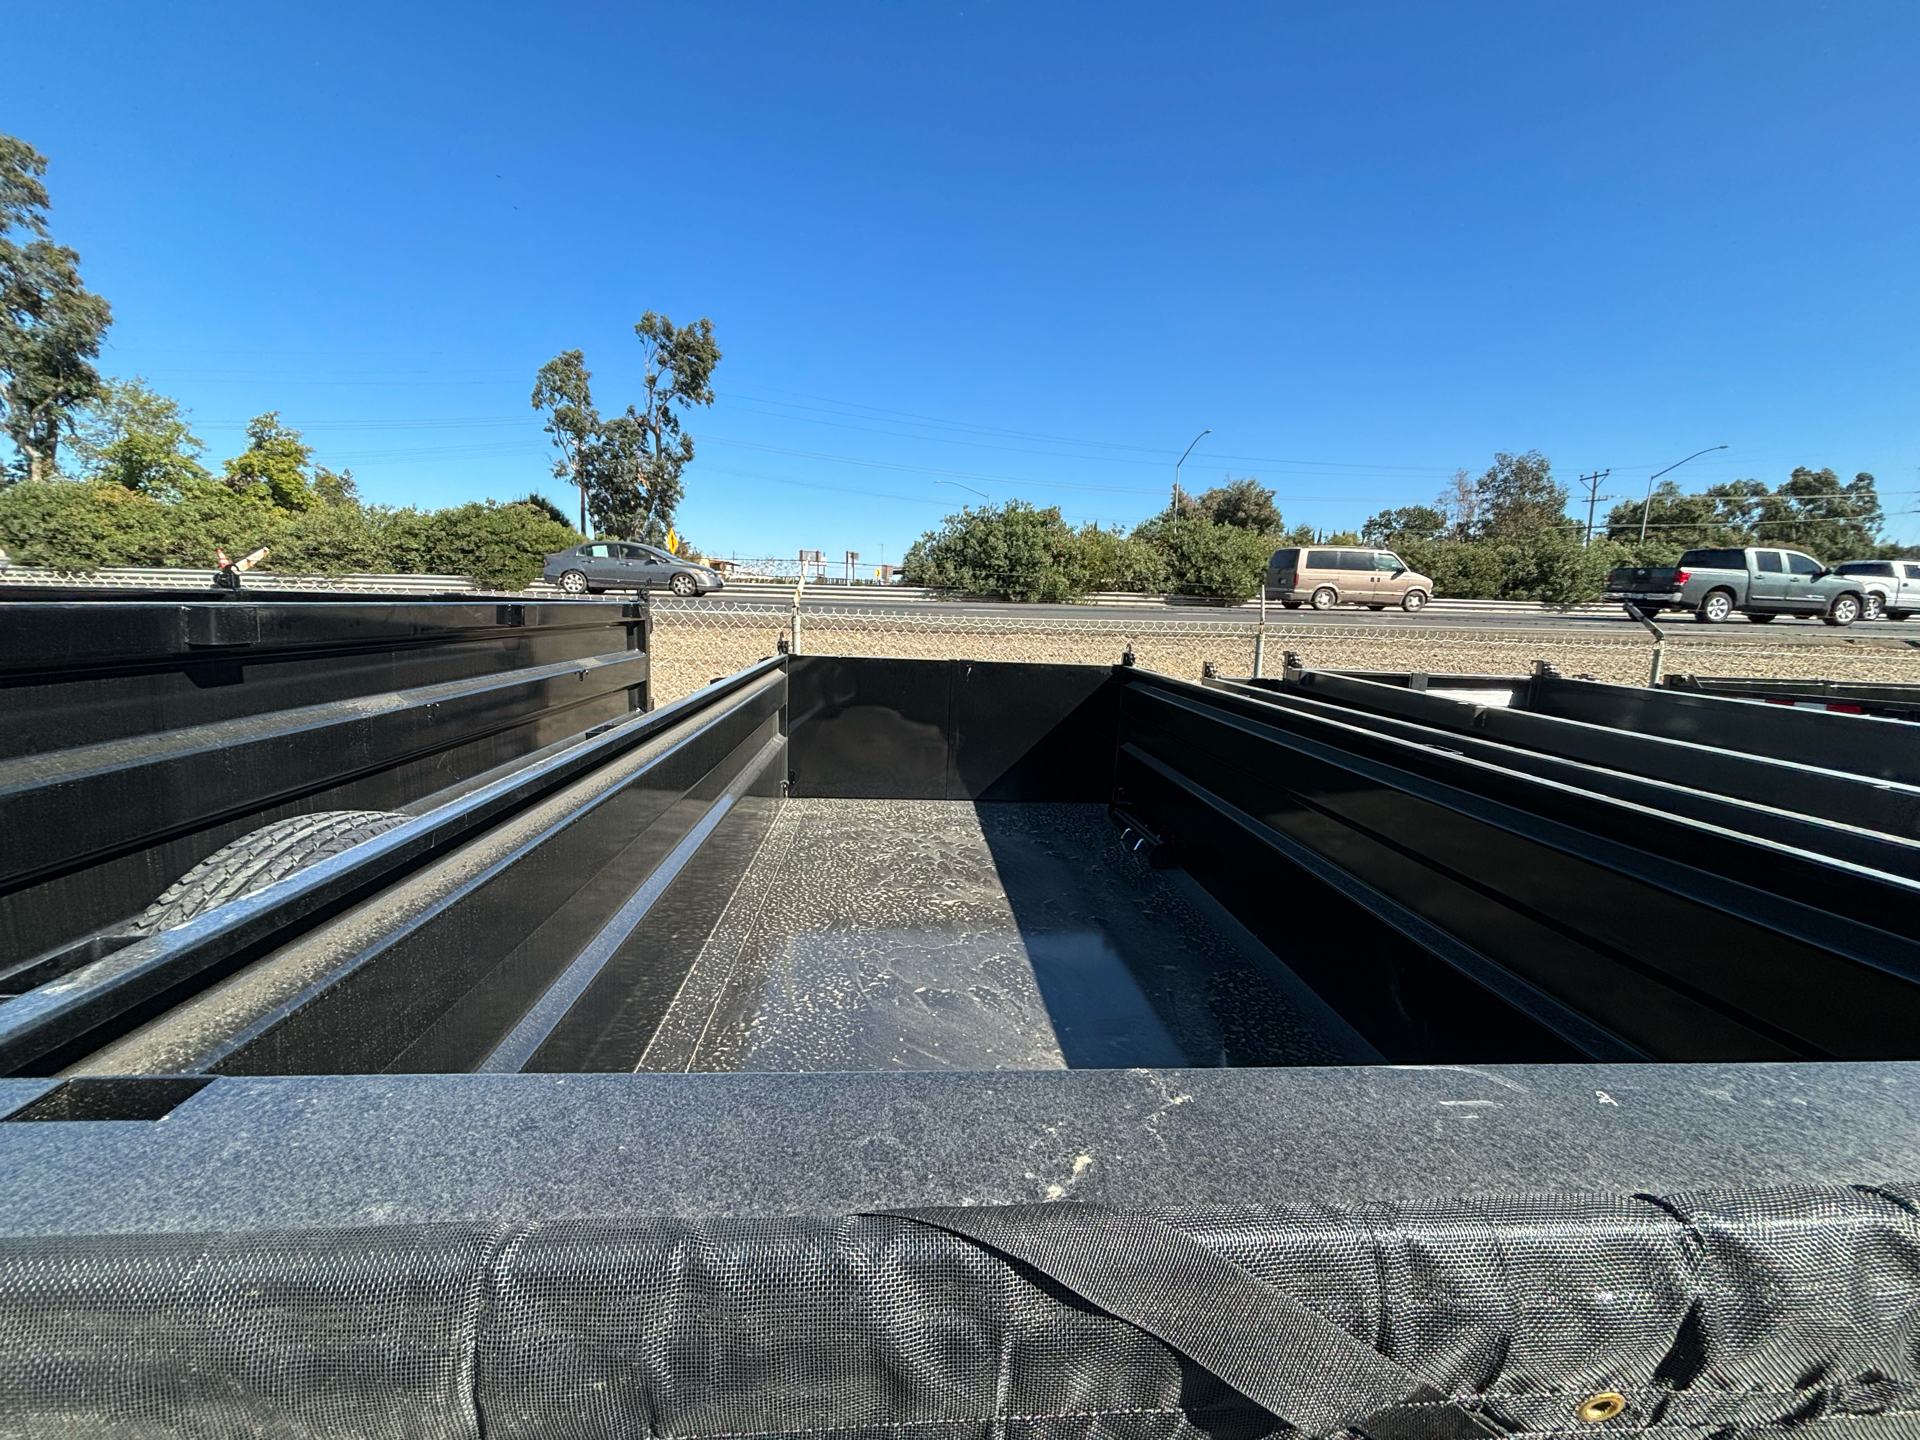 2024 PJ Trailers 7X14 14K Low Pro High Side Dump in Acampo, California - Photo 9